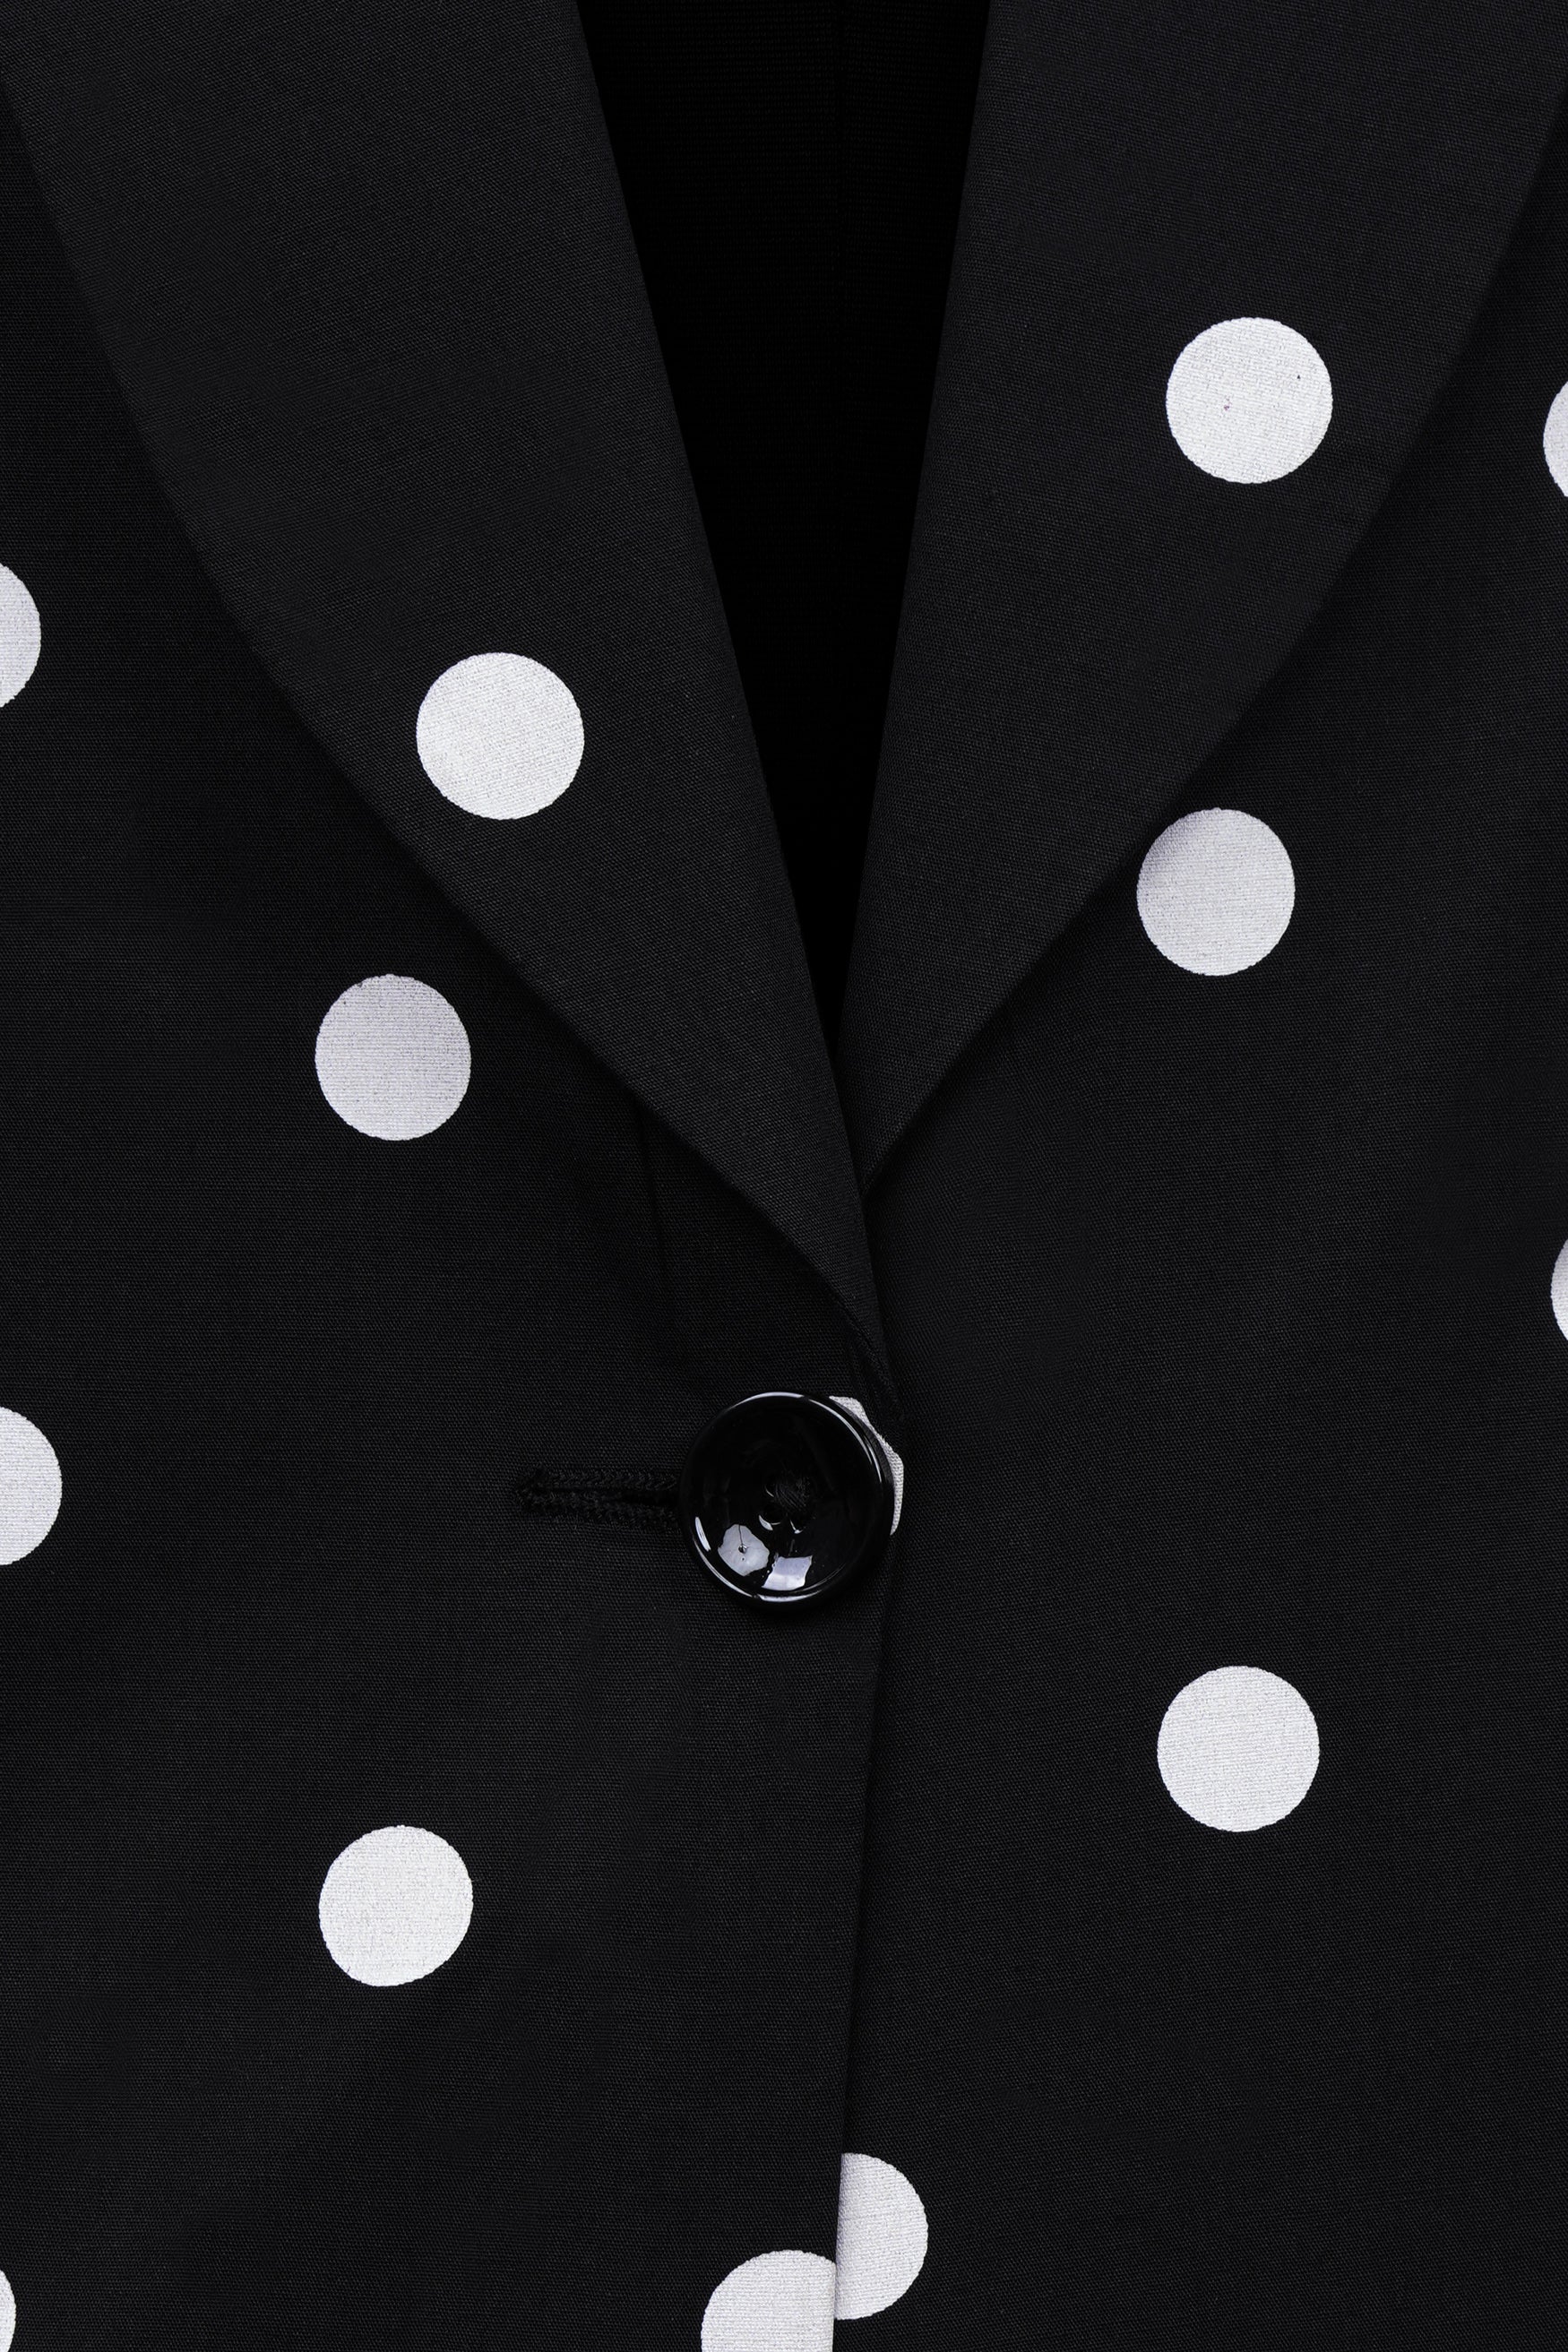 Jade Black and Bright White Polka Dotted Premium Cotton Women’s Tuxedo Suit